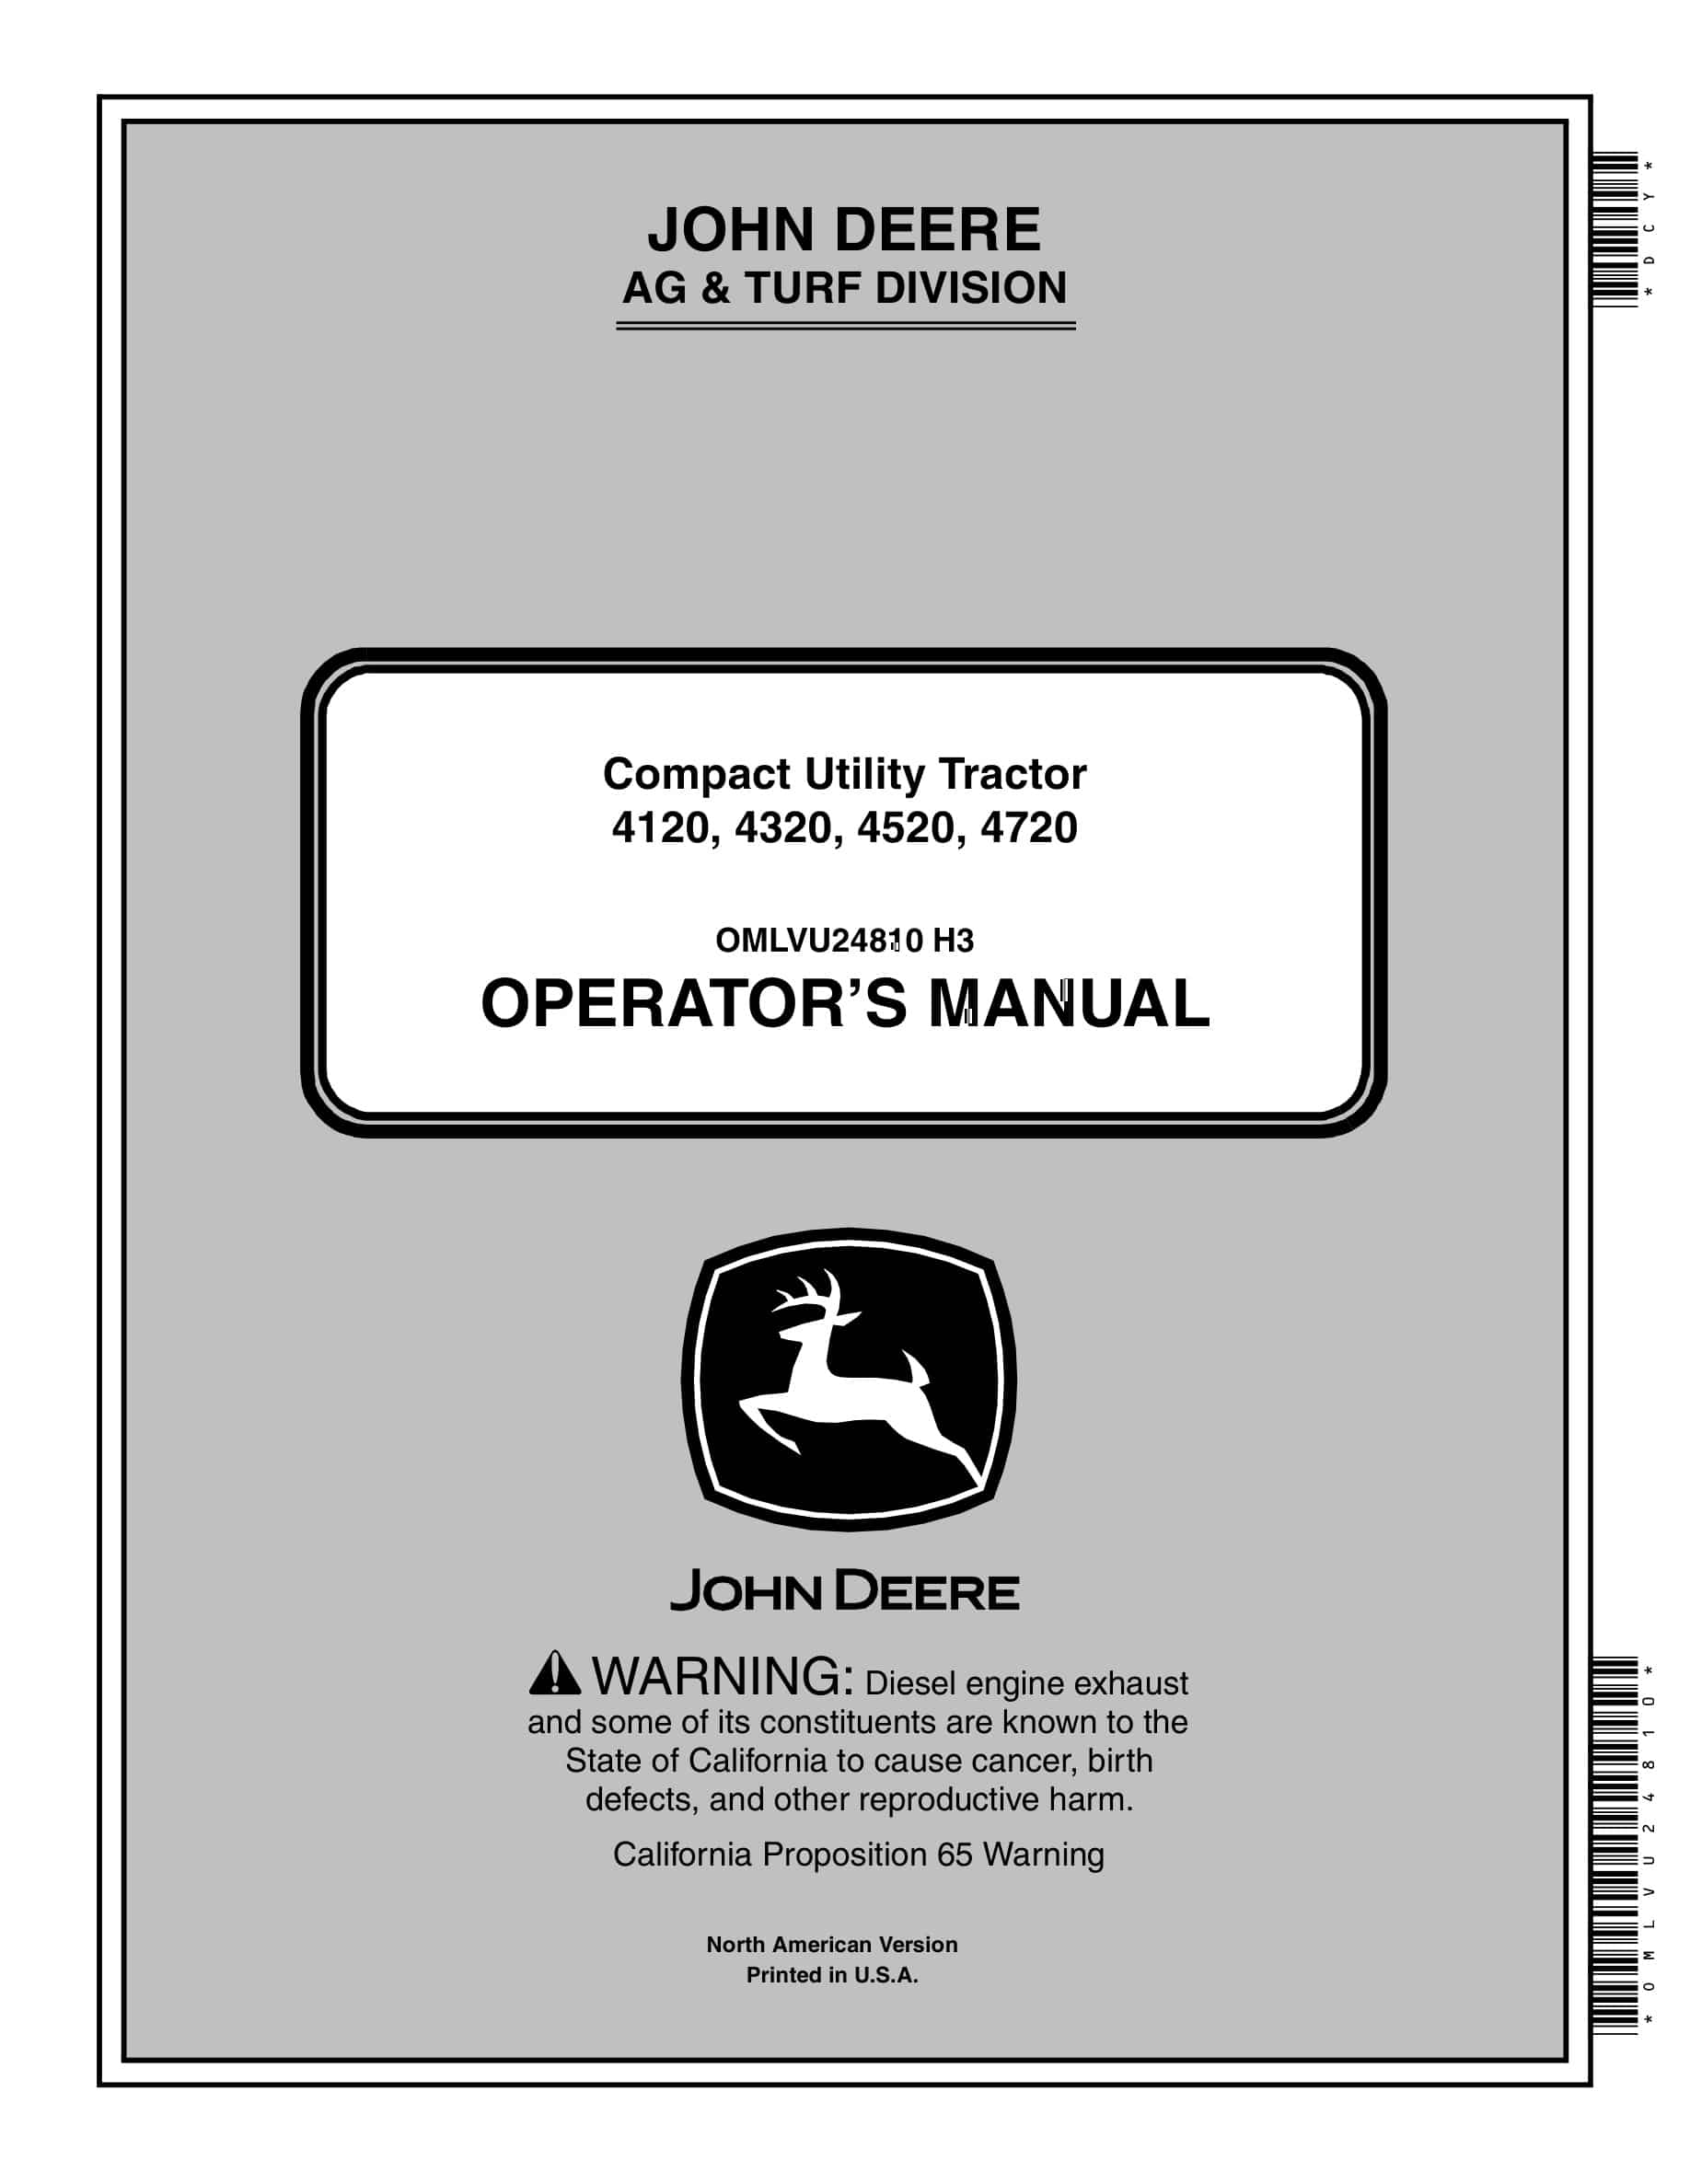 John Deere 4120, 4320, 4520, 4720 Compact Utility Tractors Operator Manual OMLVU24810-1